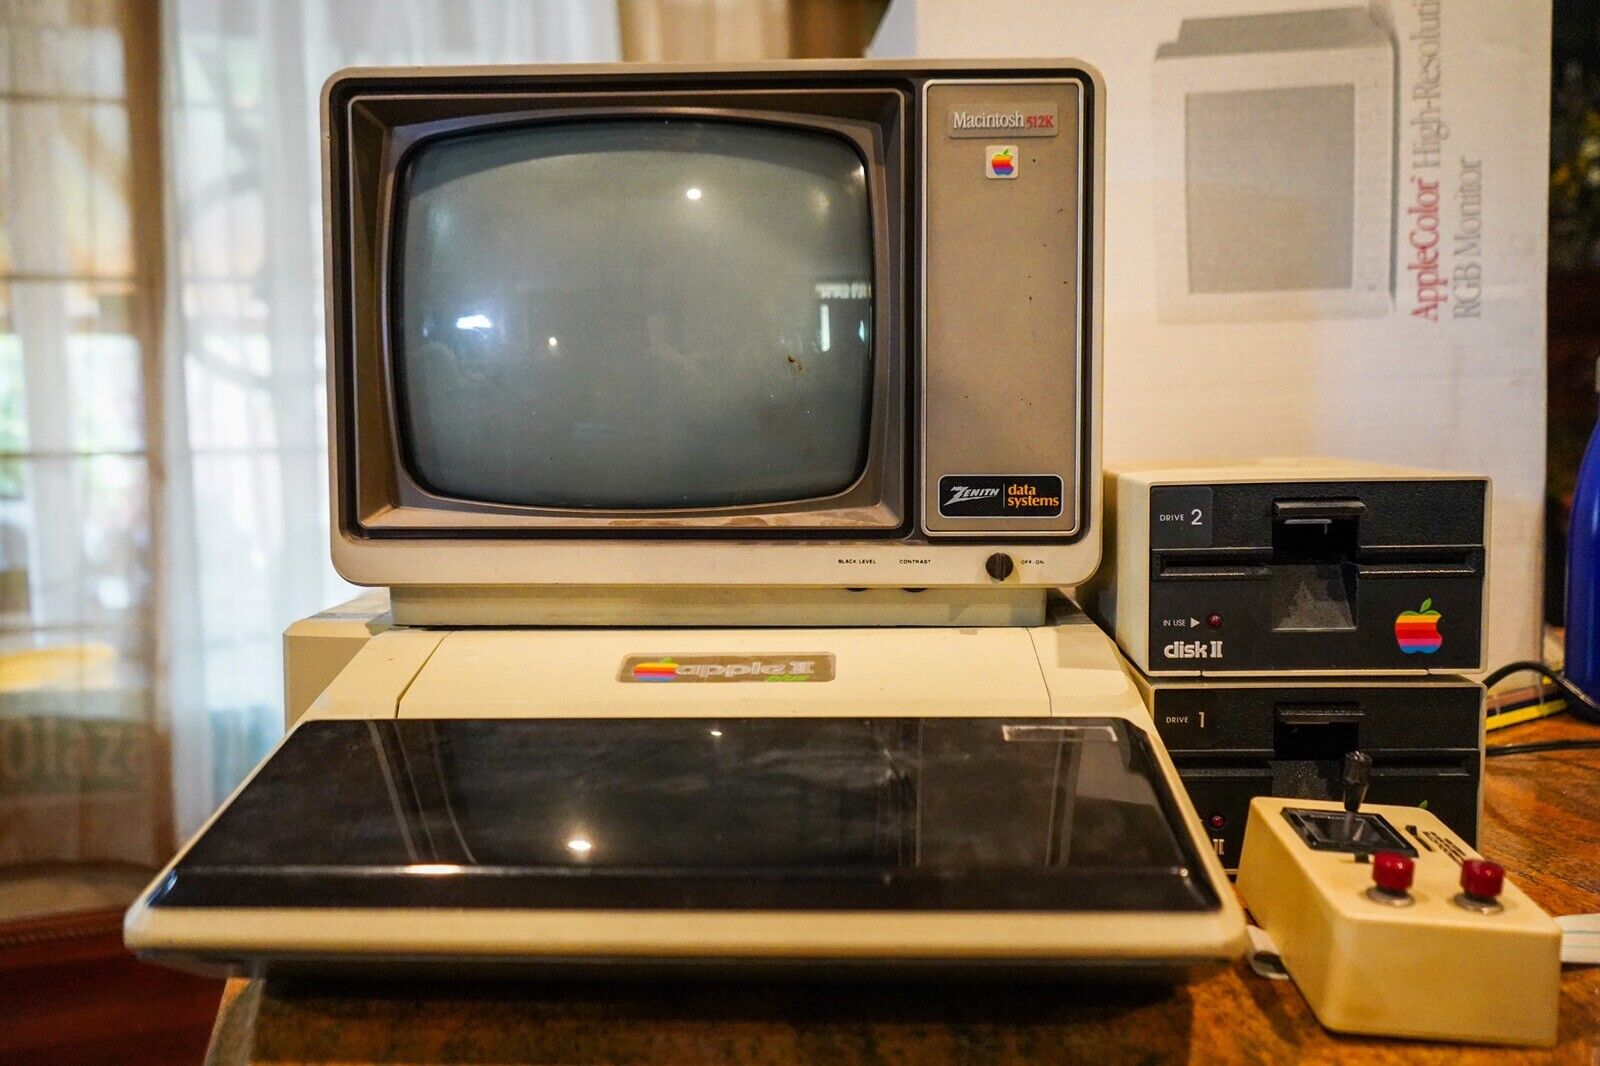 Apple II Plus Mac Monitor, Computer, Joystick, Manuals everything Seen In Photos